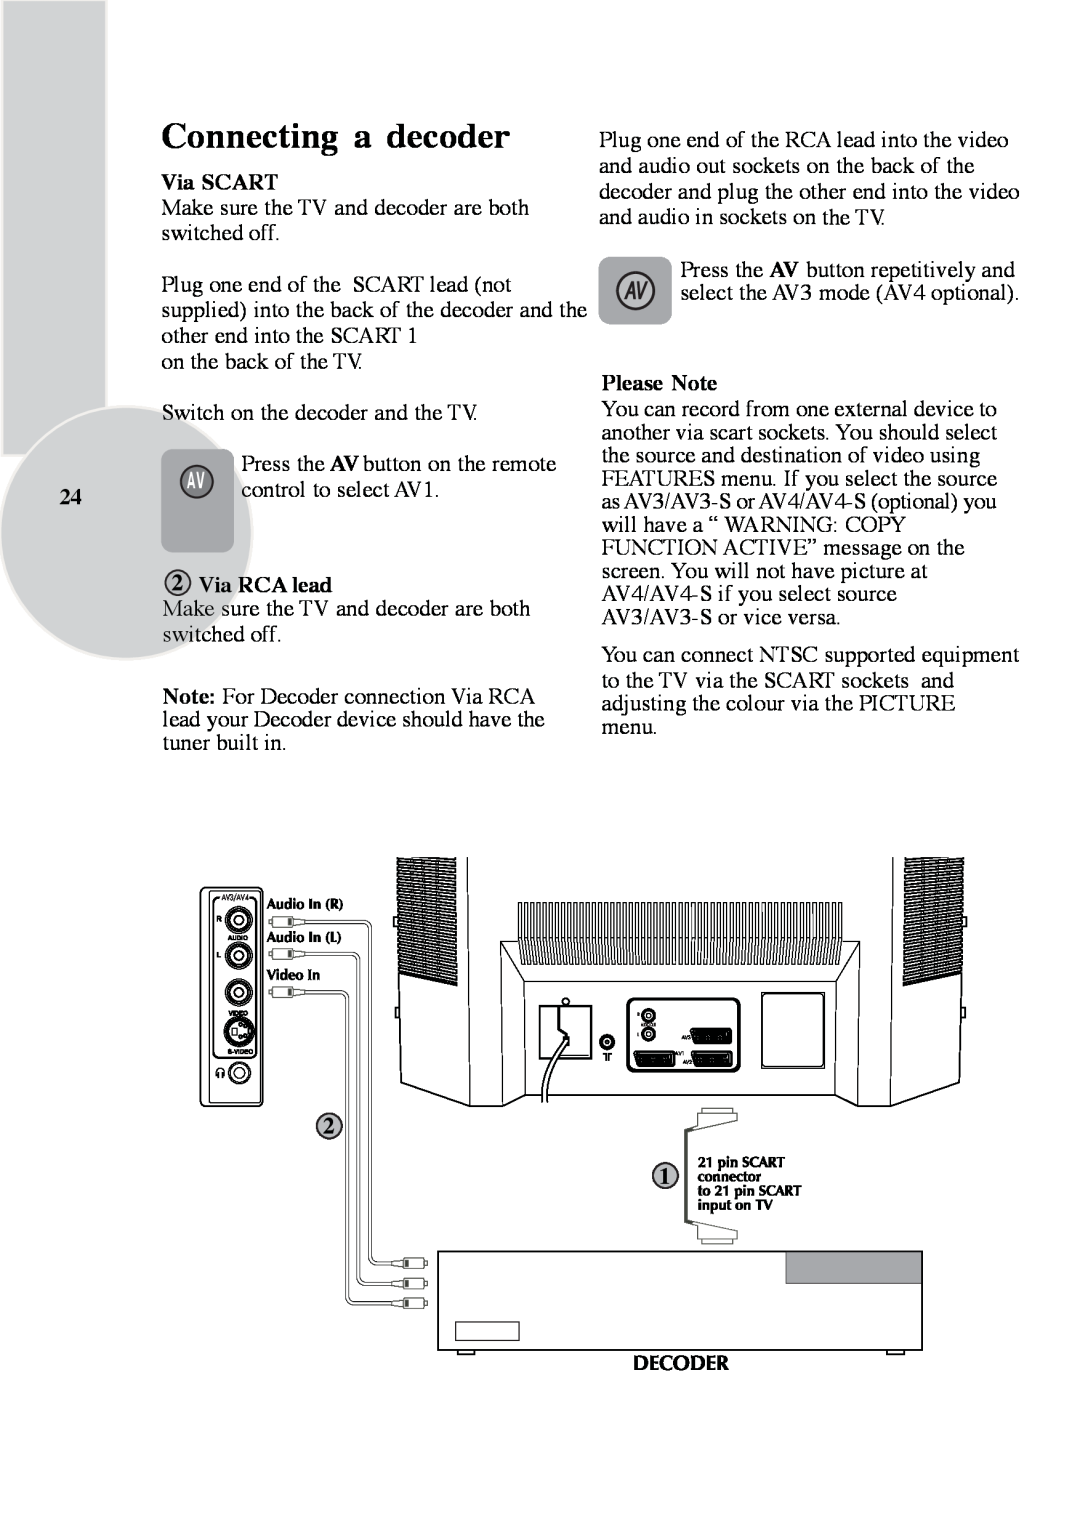 ITT 29-100-1 ST manual Connecting a decoder, Via SCART, Via RCA lead, Please Note, AV3/AV4 